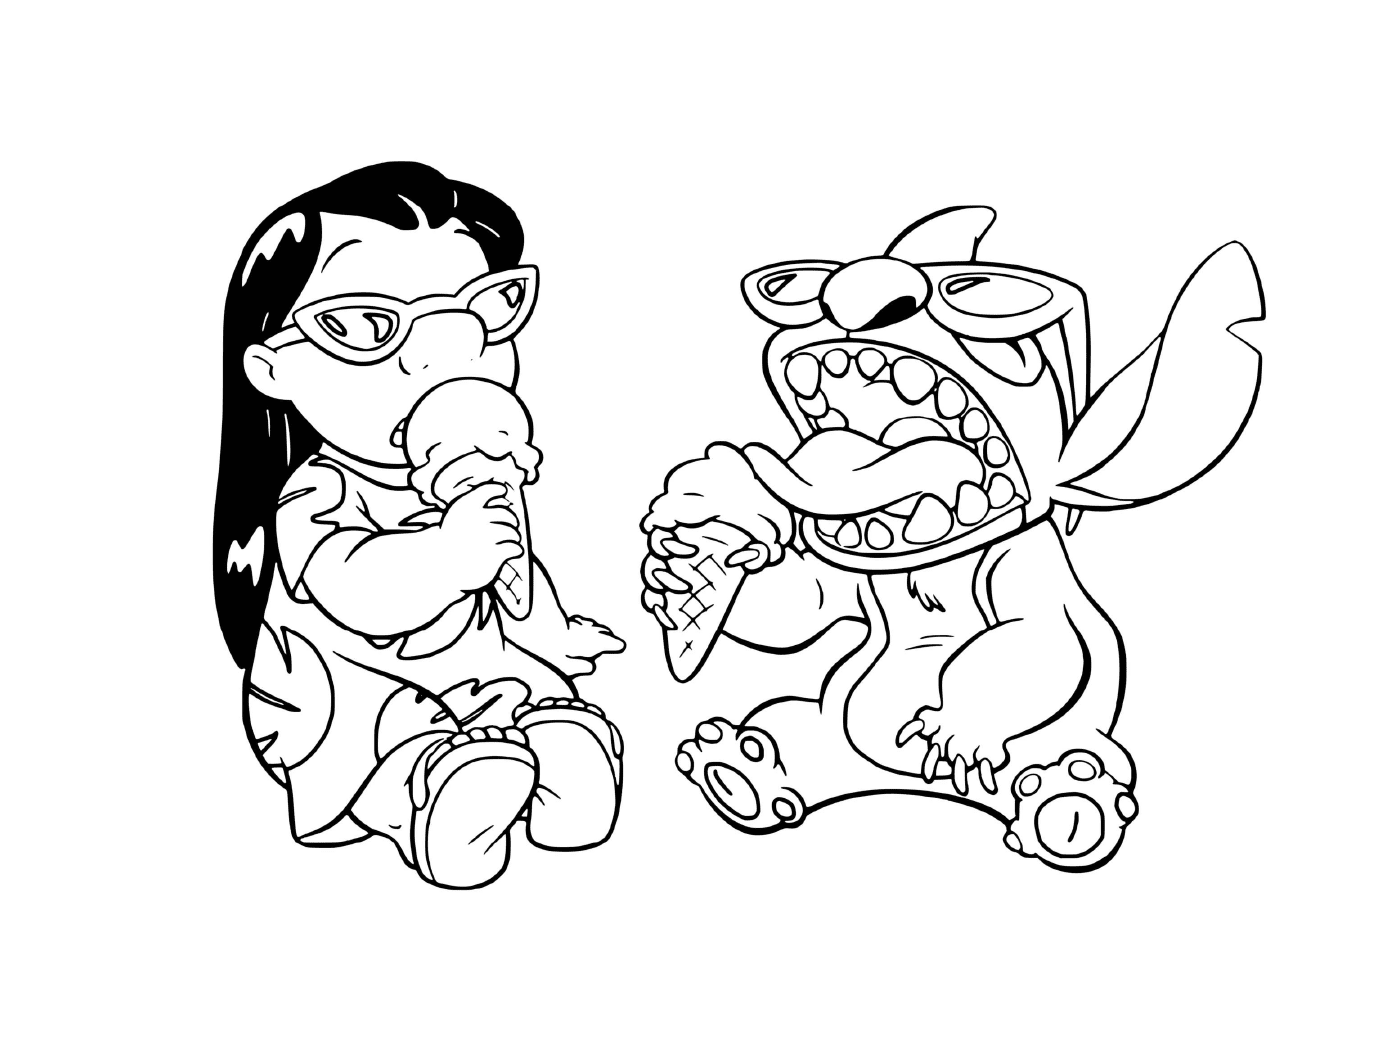  Stitch y Lilo comen hielo 